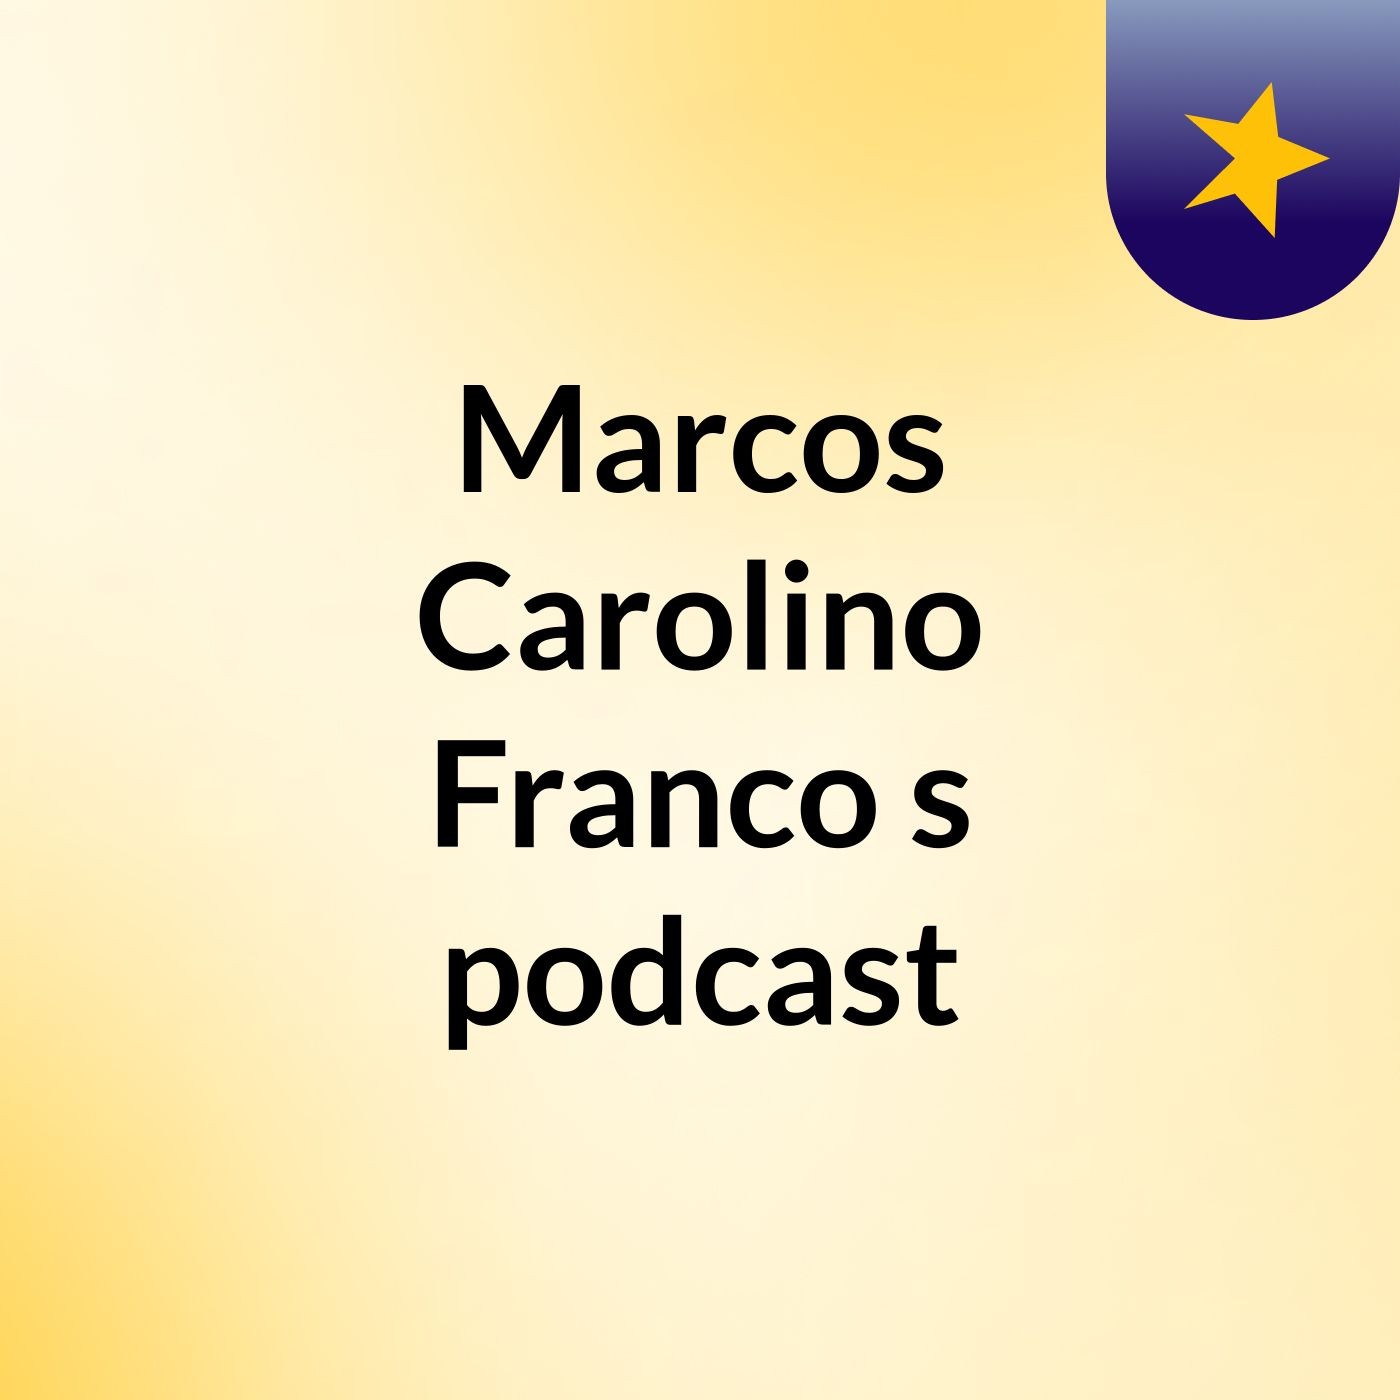 Marcos Carolino Franco's podcast